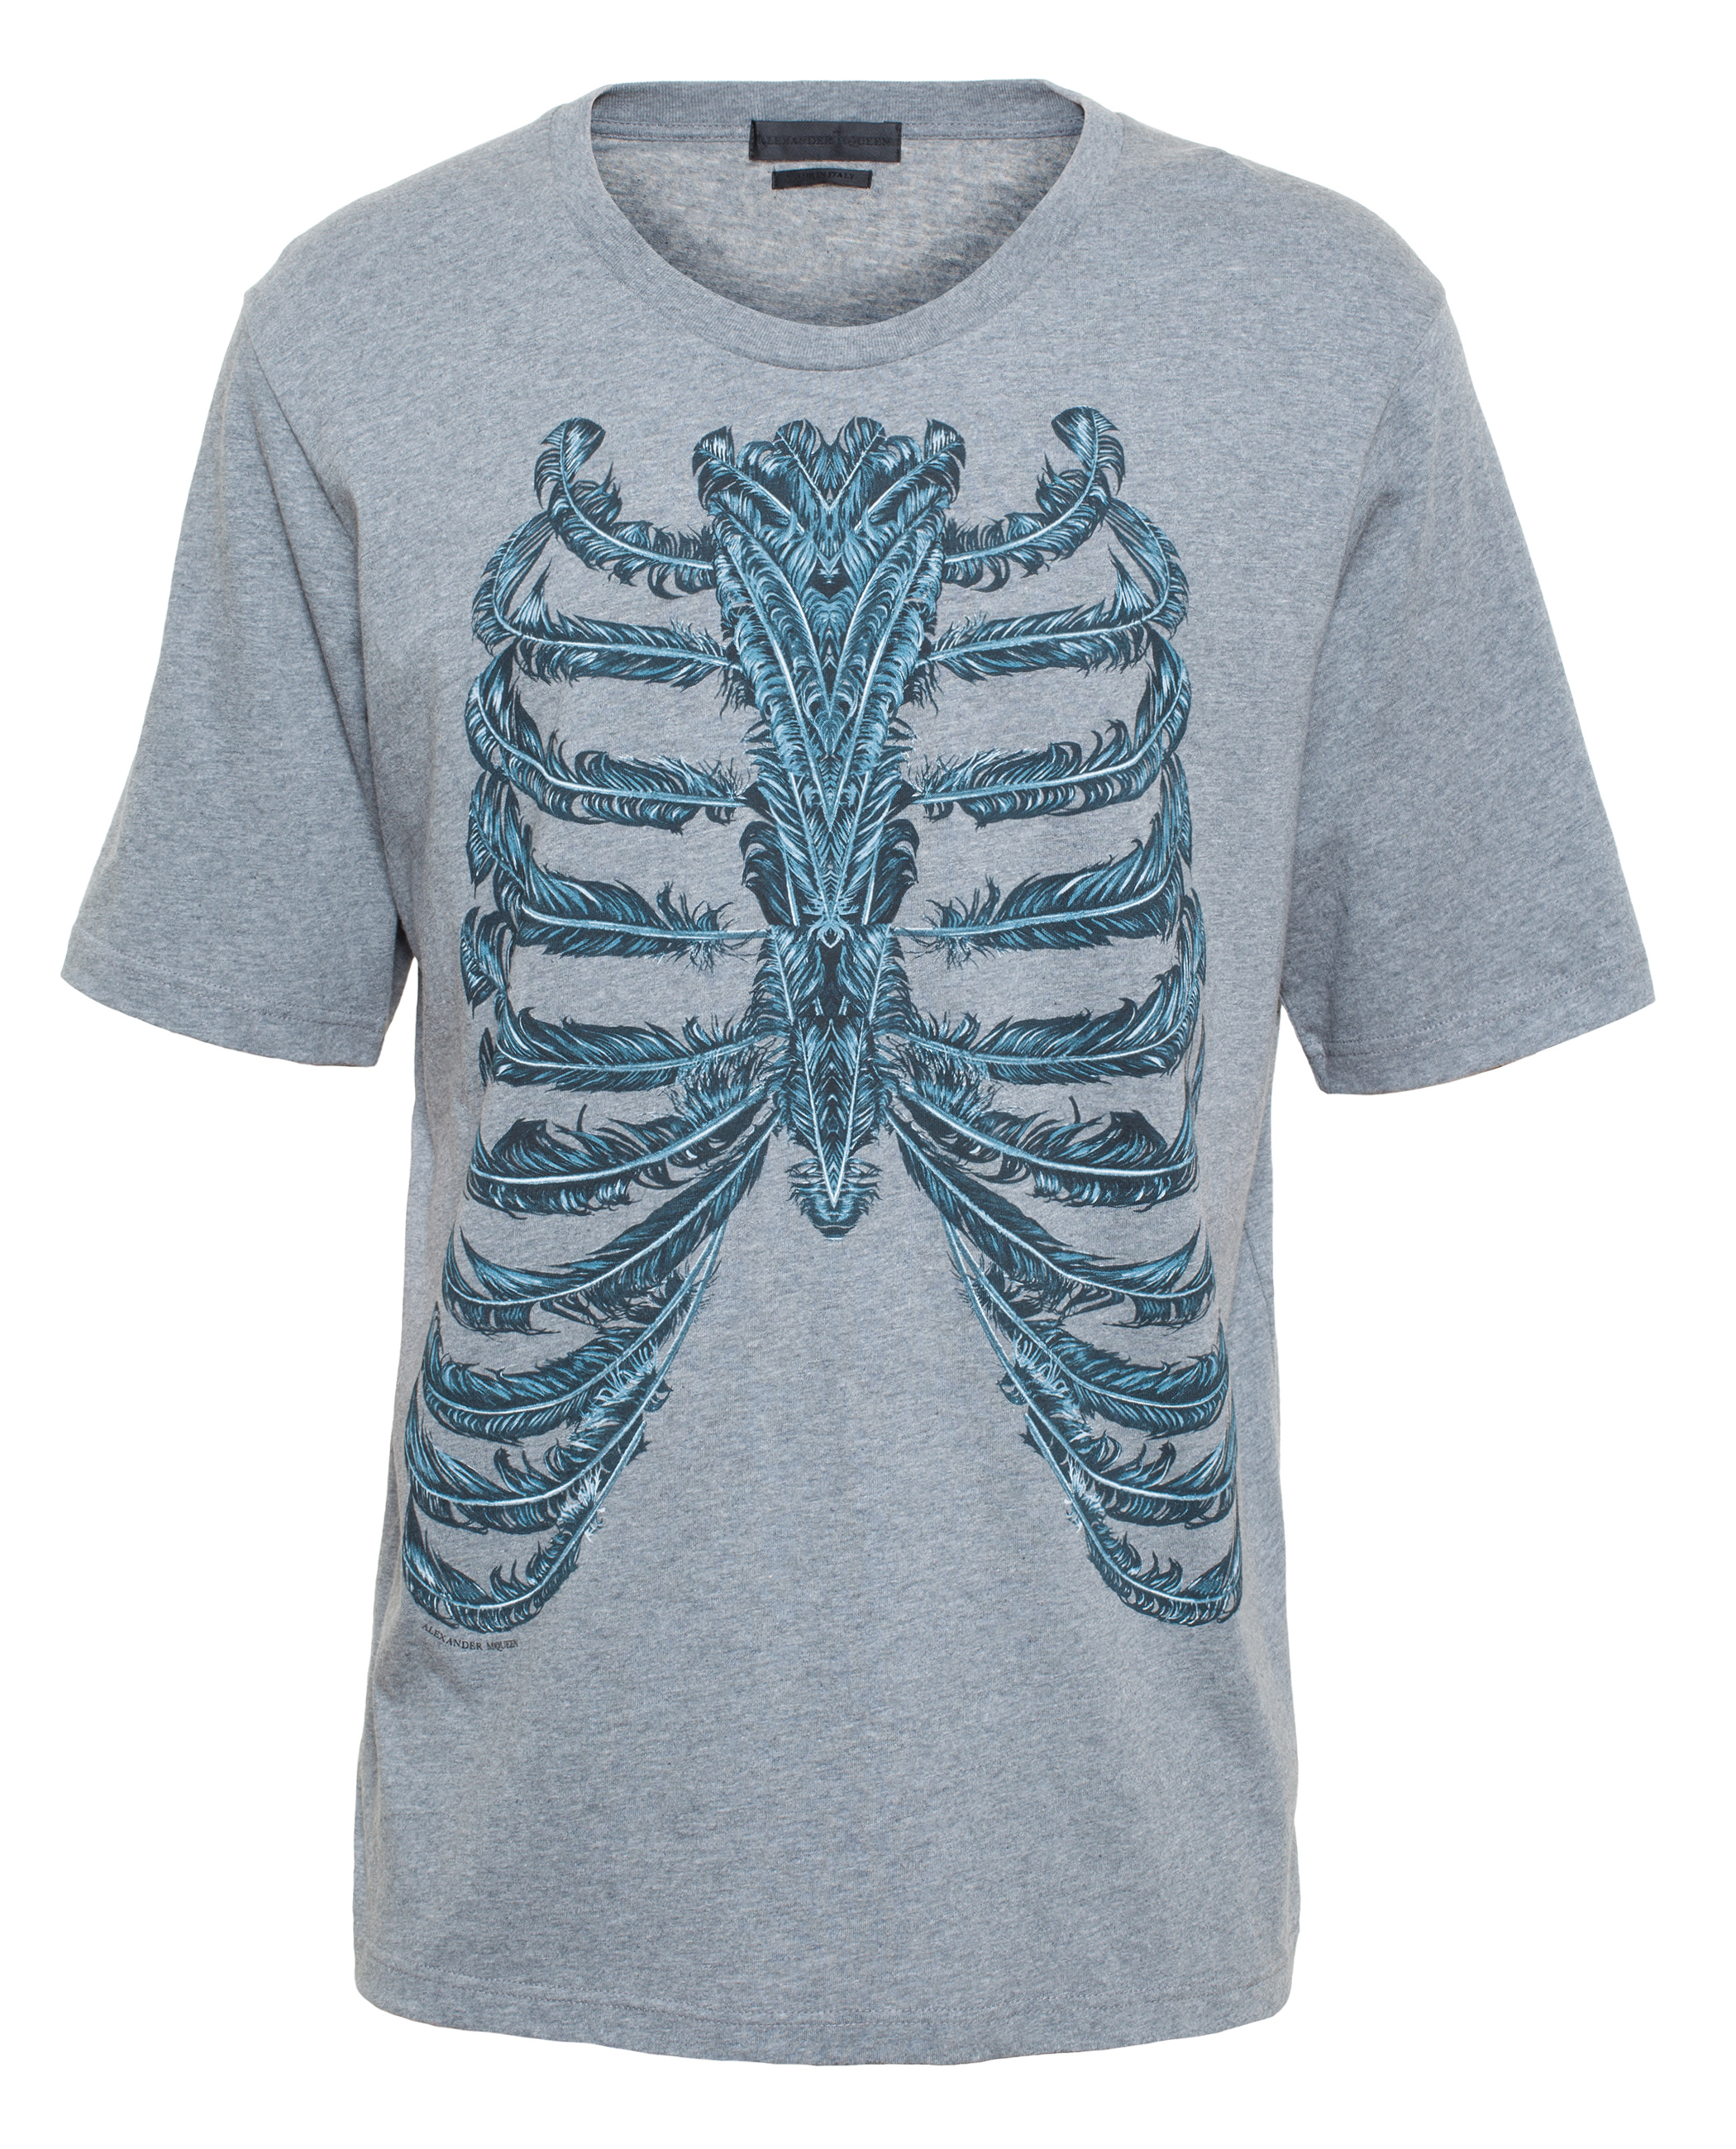 Lyst - Alexander McQueen Feather Skeleton T-Shirt in Gray for Men